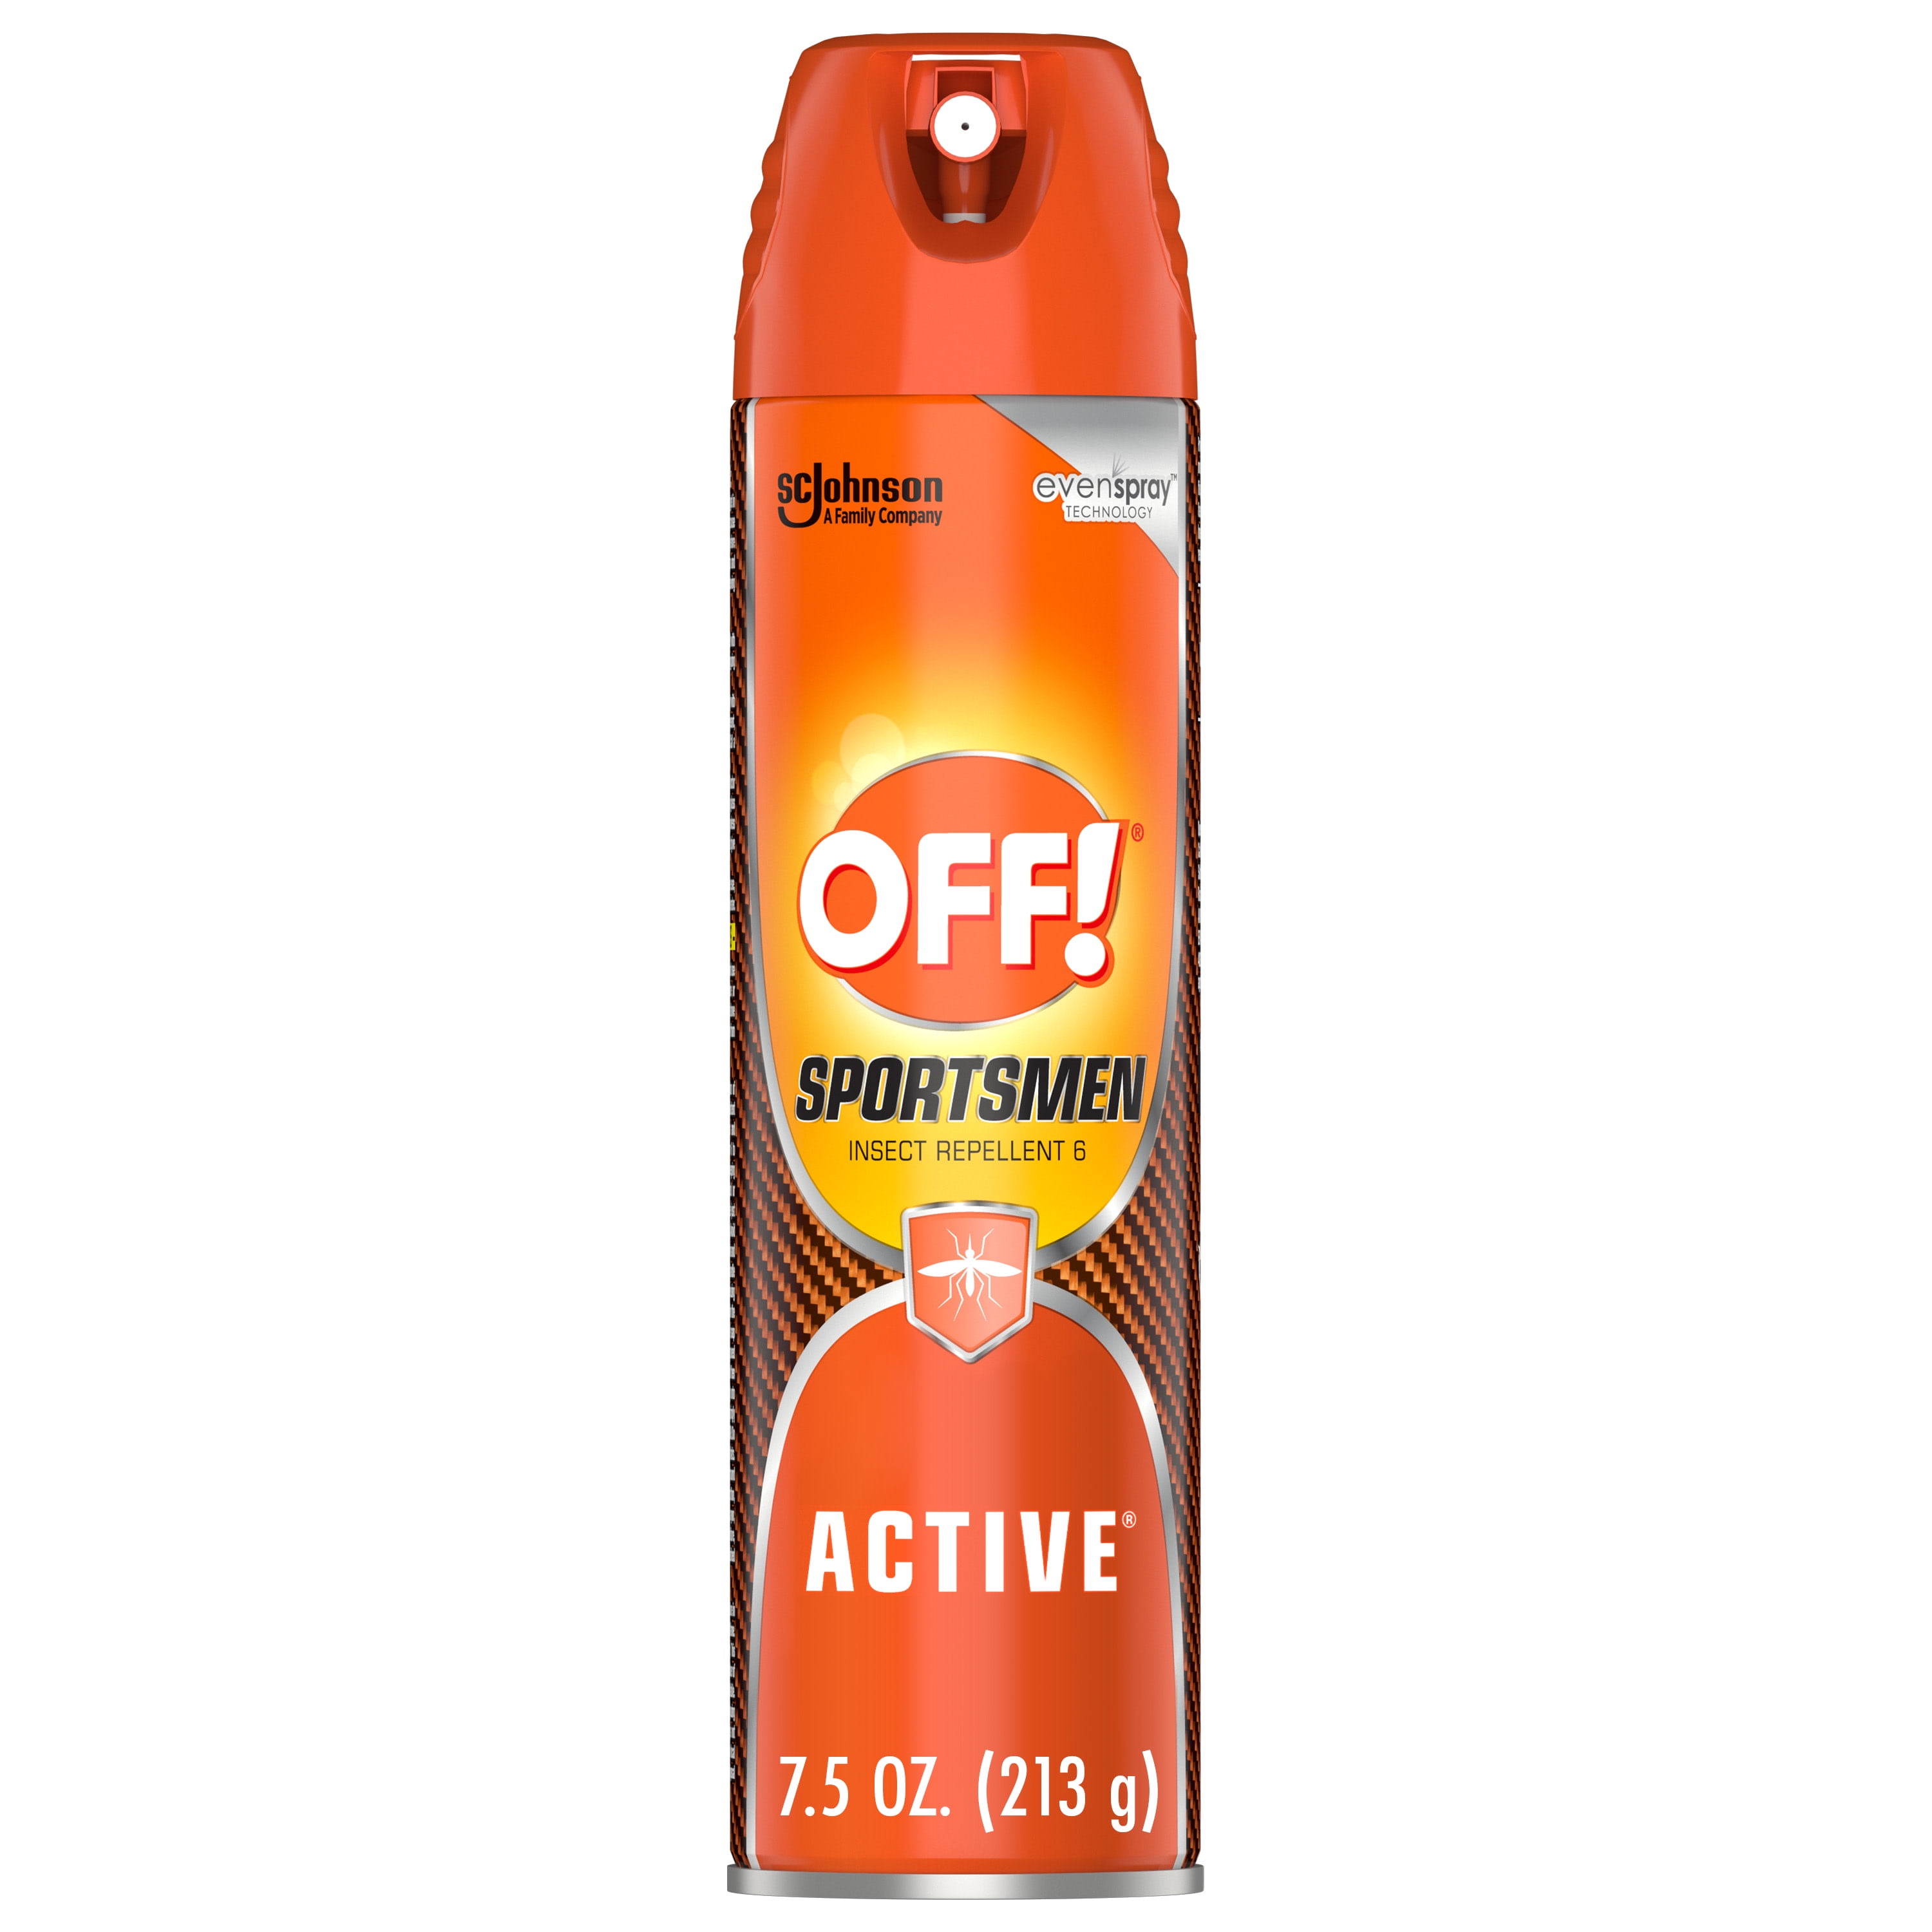 OFF! Sportsmen Active Insect Repellent VI, 7.5 Oz